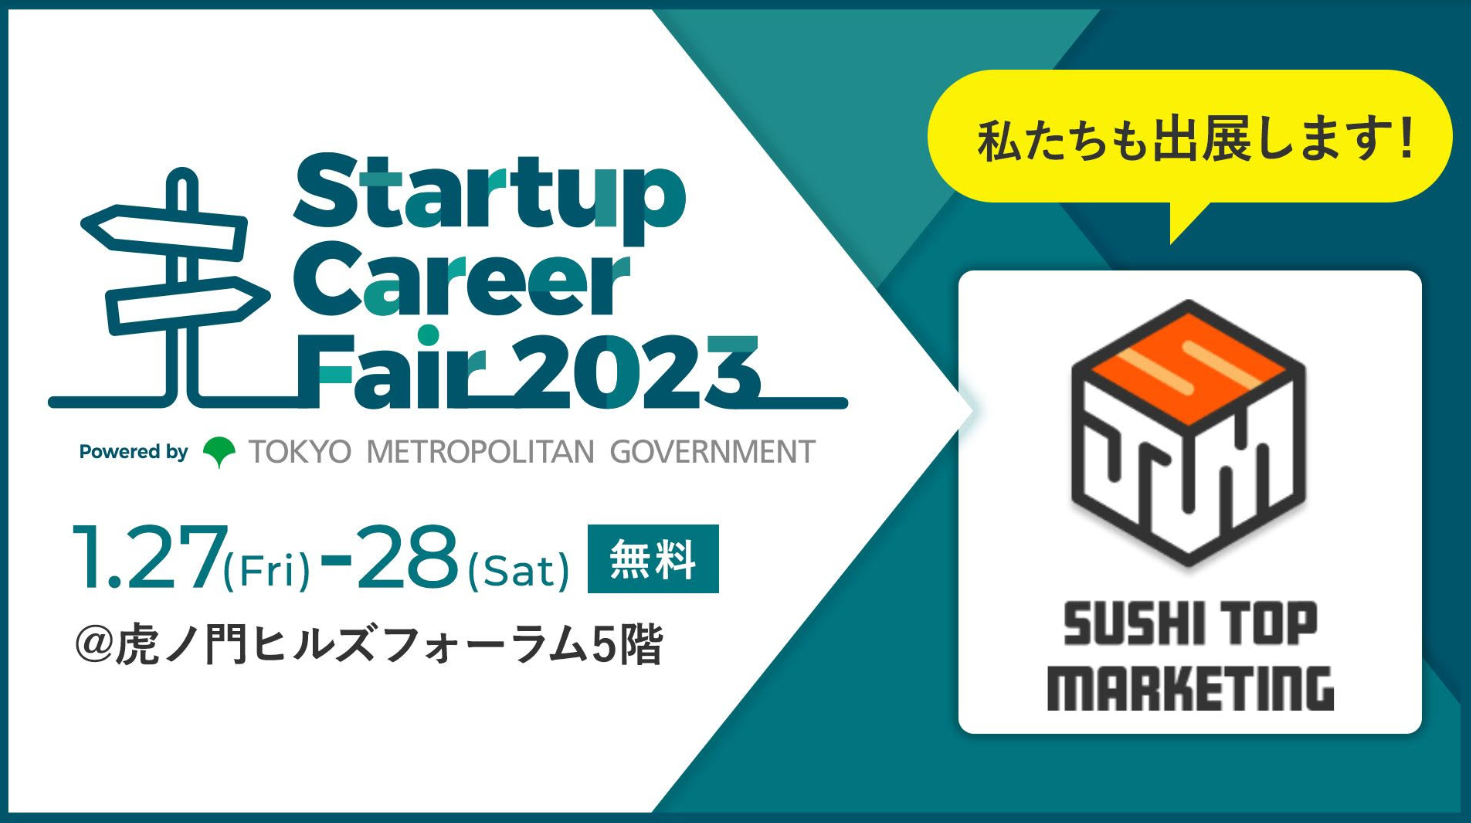 「Startup Career Fair 2023」にSUSHI TOPが出展します。